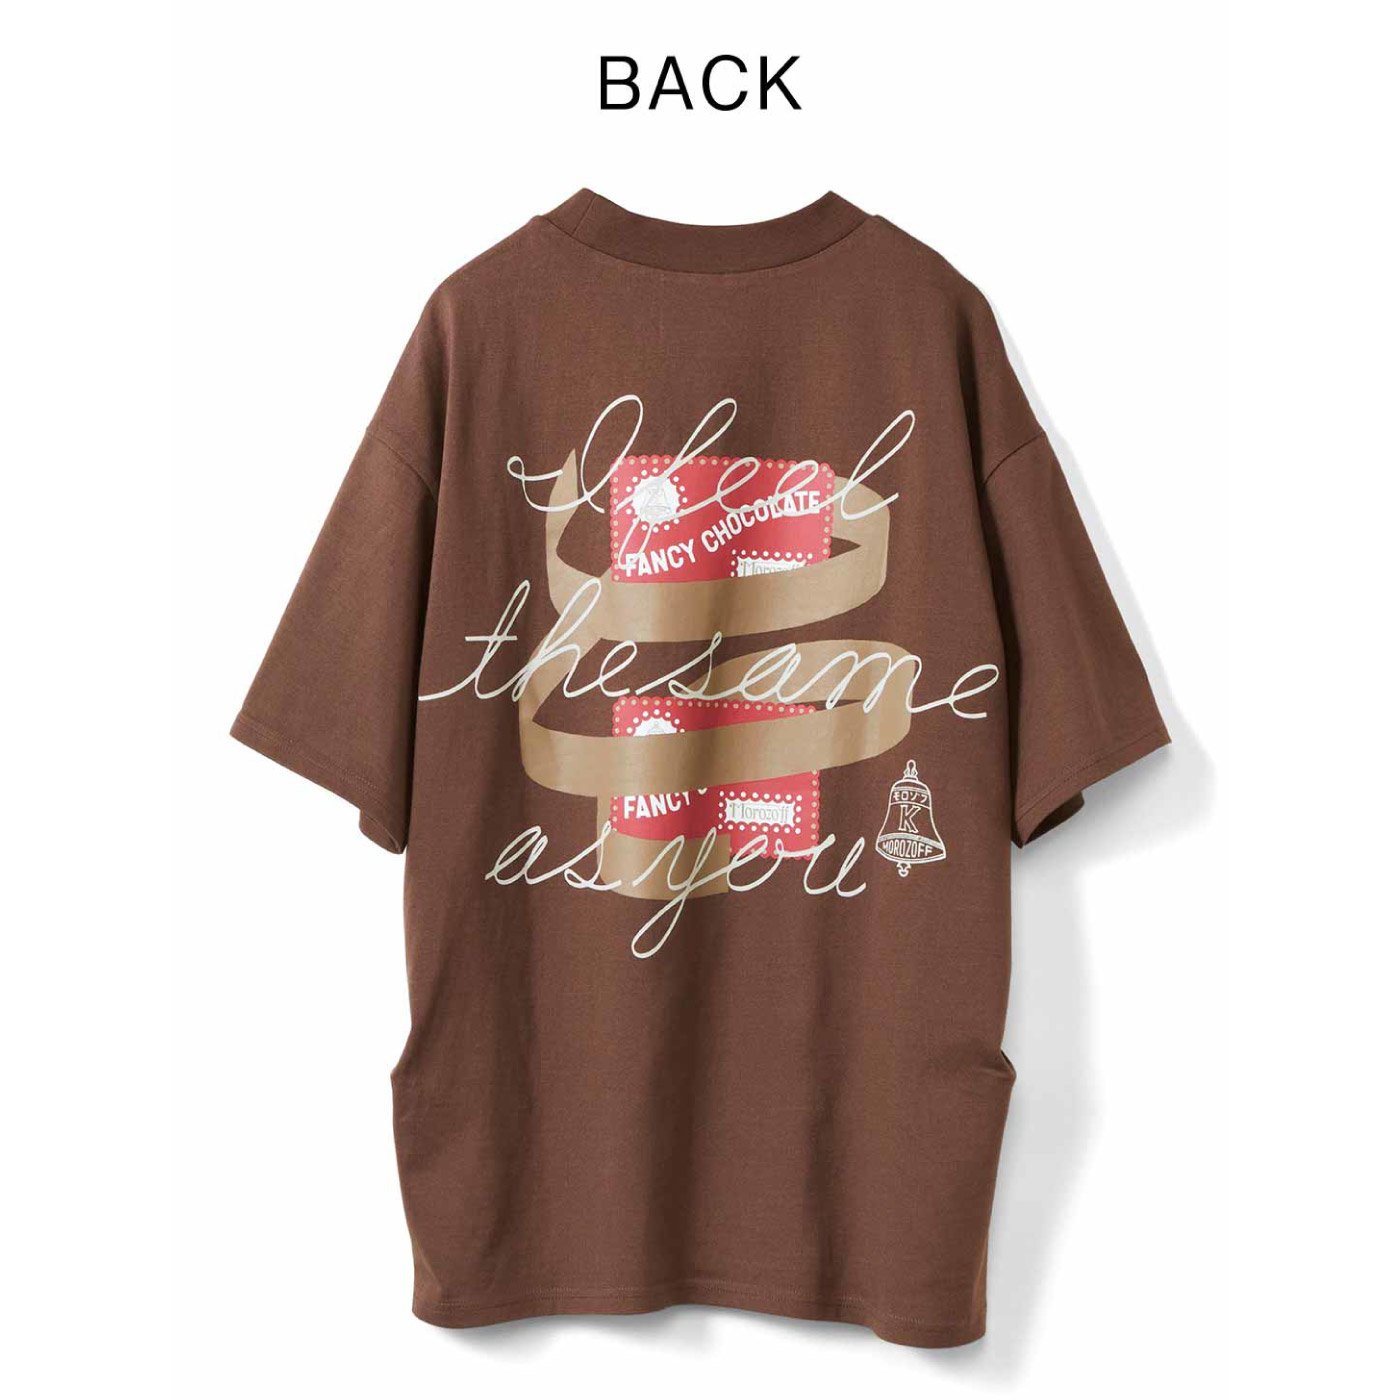 Live love cottonプロジェクト　IEDIT[イディット]　洋菓子のモロゾフコラボ大人な甘さクラシカルチョコレートパッケージプリントTシャツ〈チョコレートブラウン〉